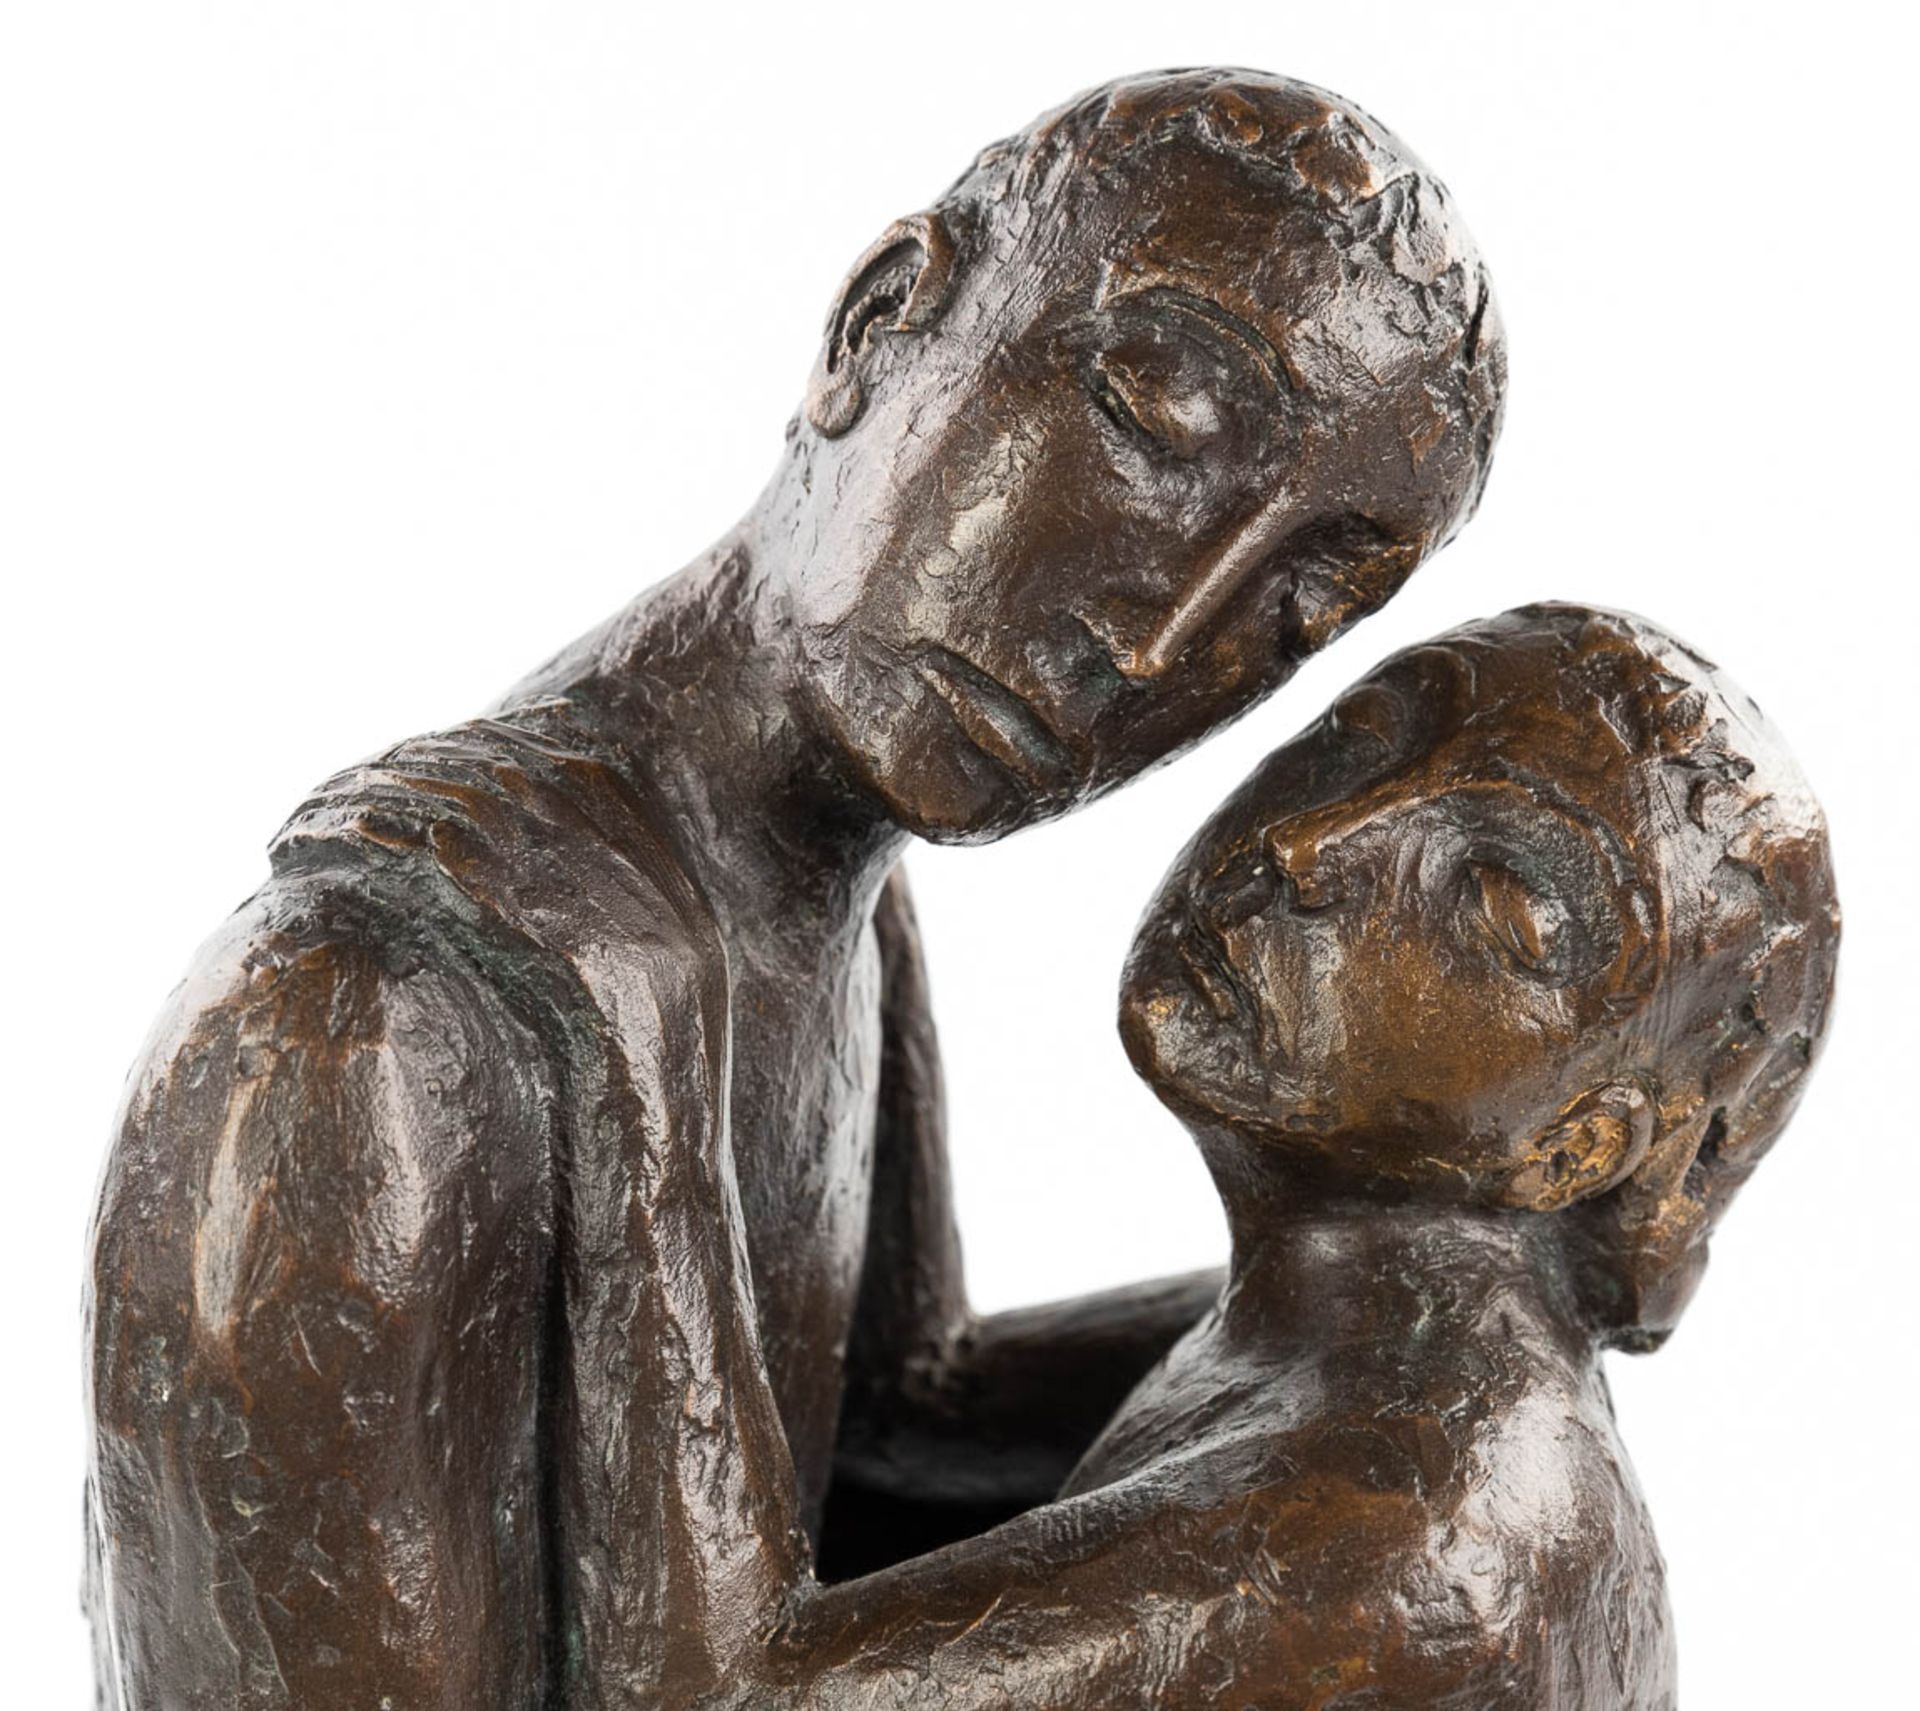 Richard KESSLER (1916) 'Der Abschied' ' Goodbye', patinated bronze. (H:41cm) - Image 6 of 11